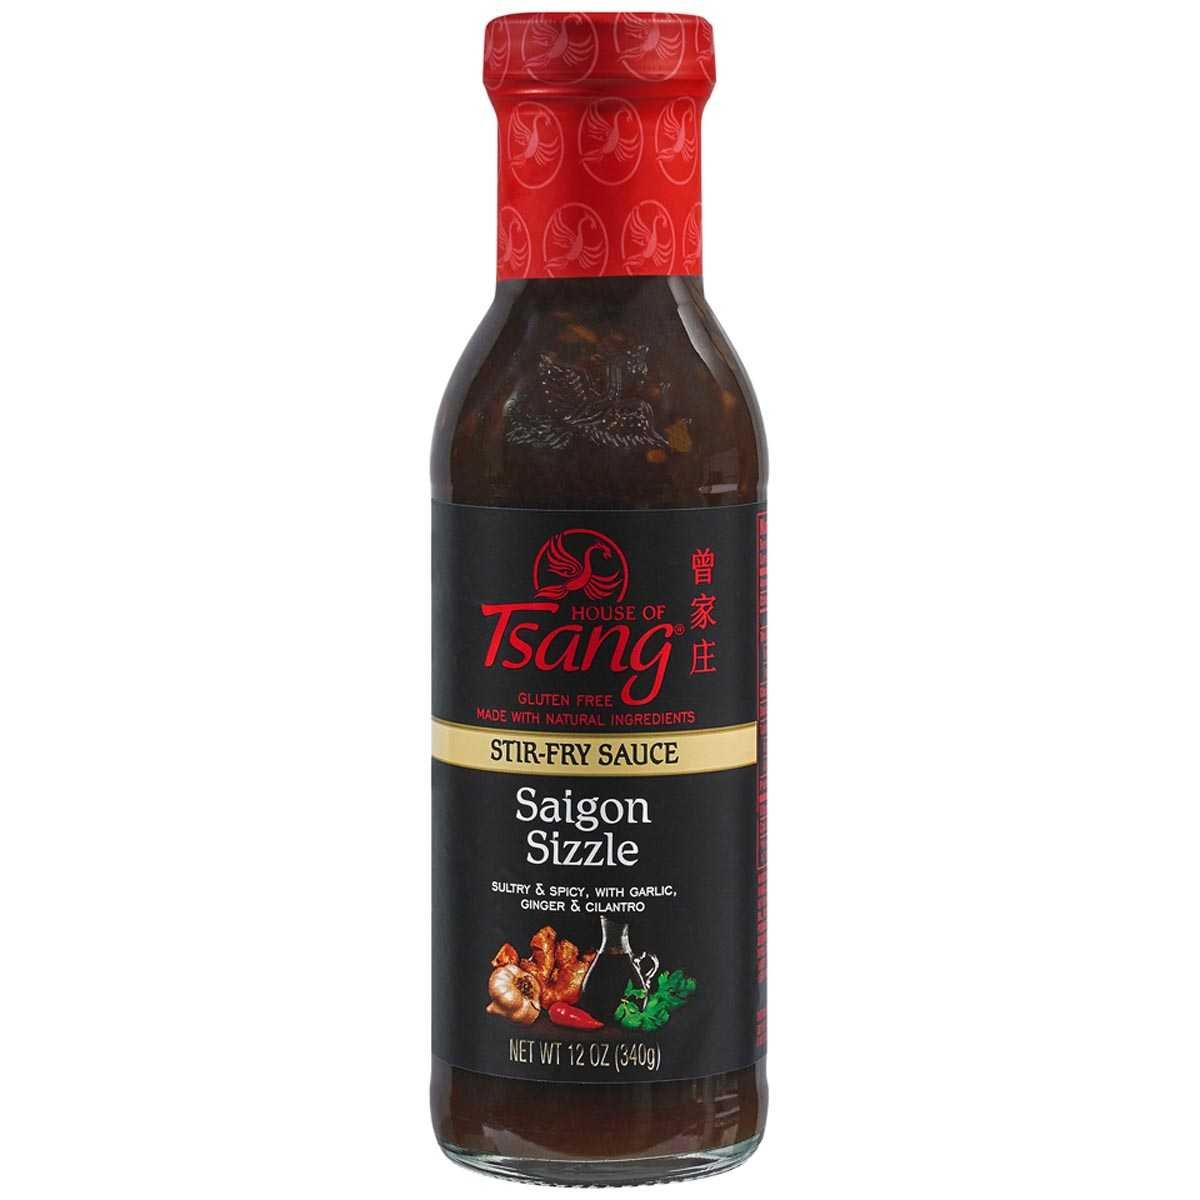 HOUSE OF TSANG: Sauce Stir-fry Saigon Sizzle, 12 oz - 0075050006173